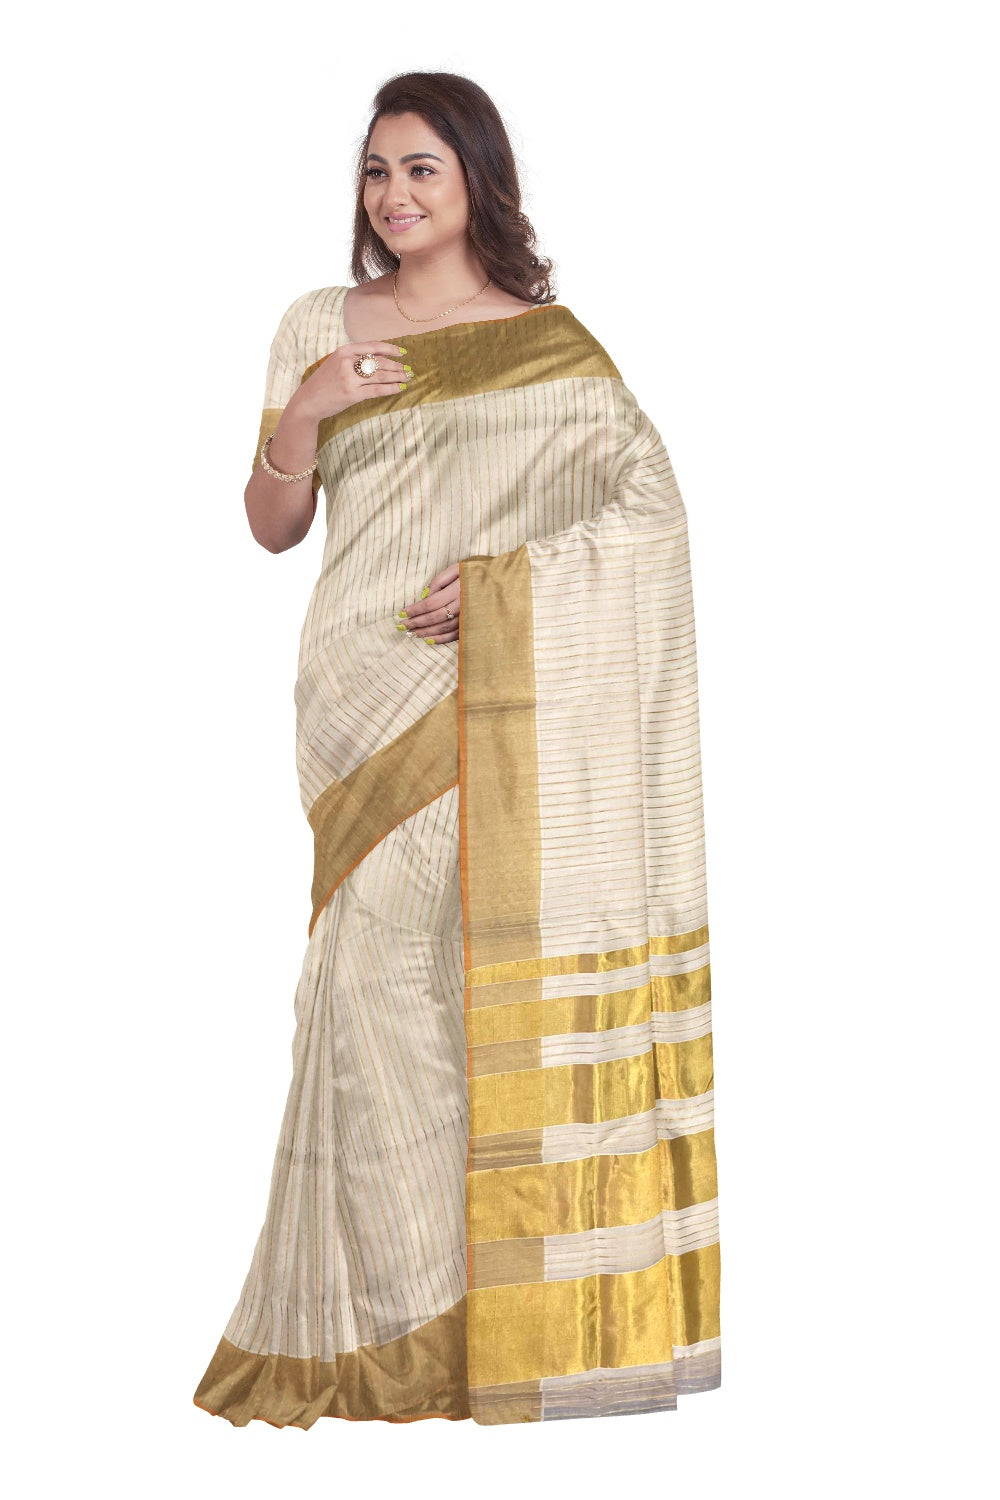 Southloom™ Handloom Kasavu Saree with Golden Kasavu Stripes on Body